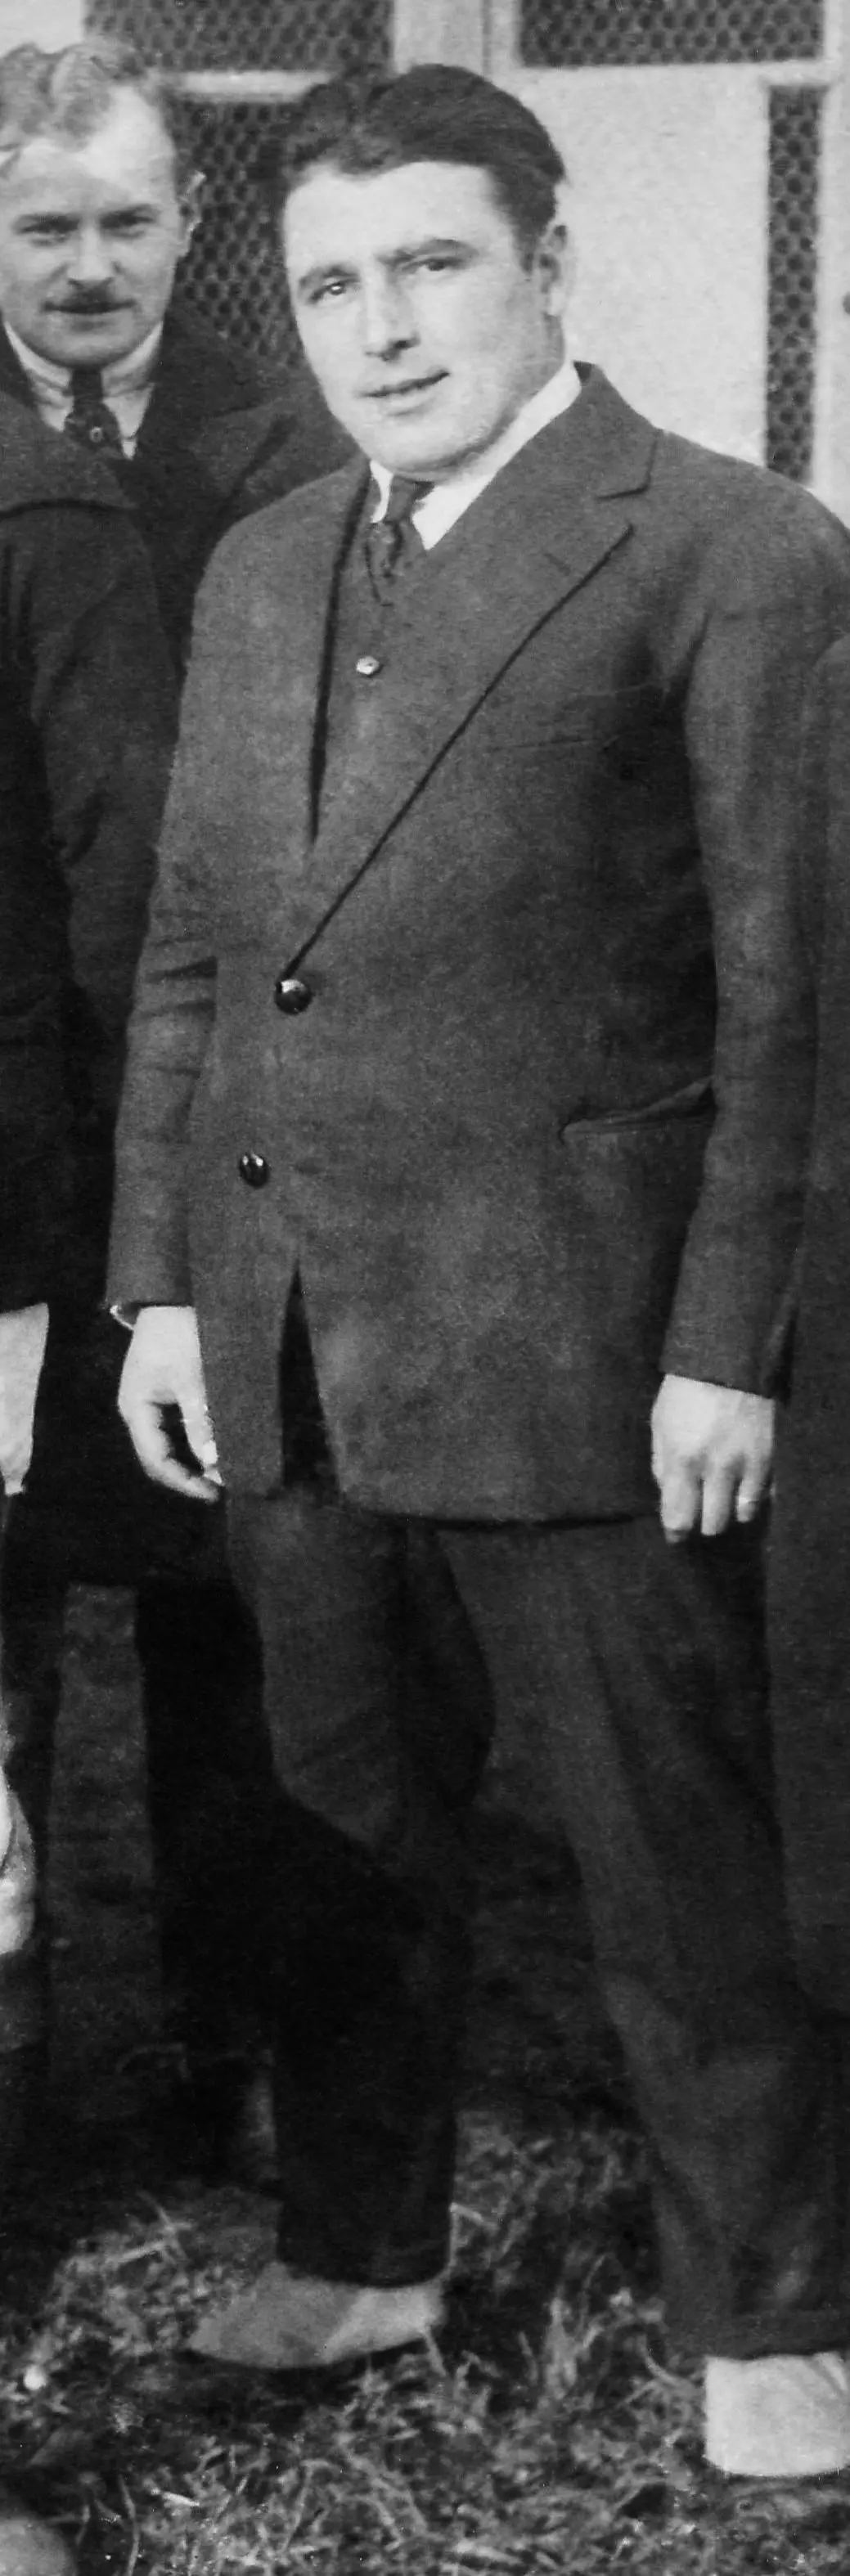 ISIDORE ODORICO (1893-1945)